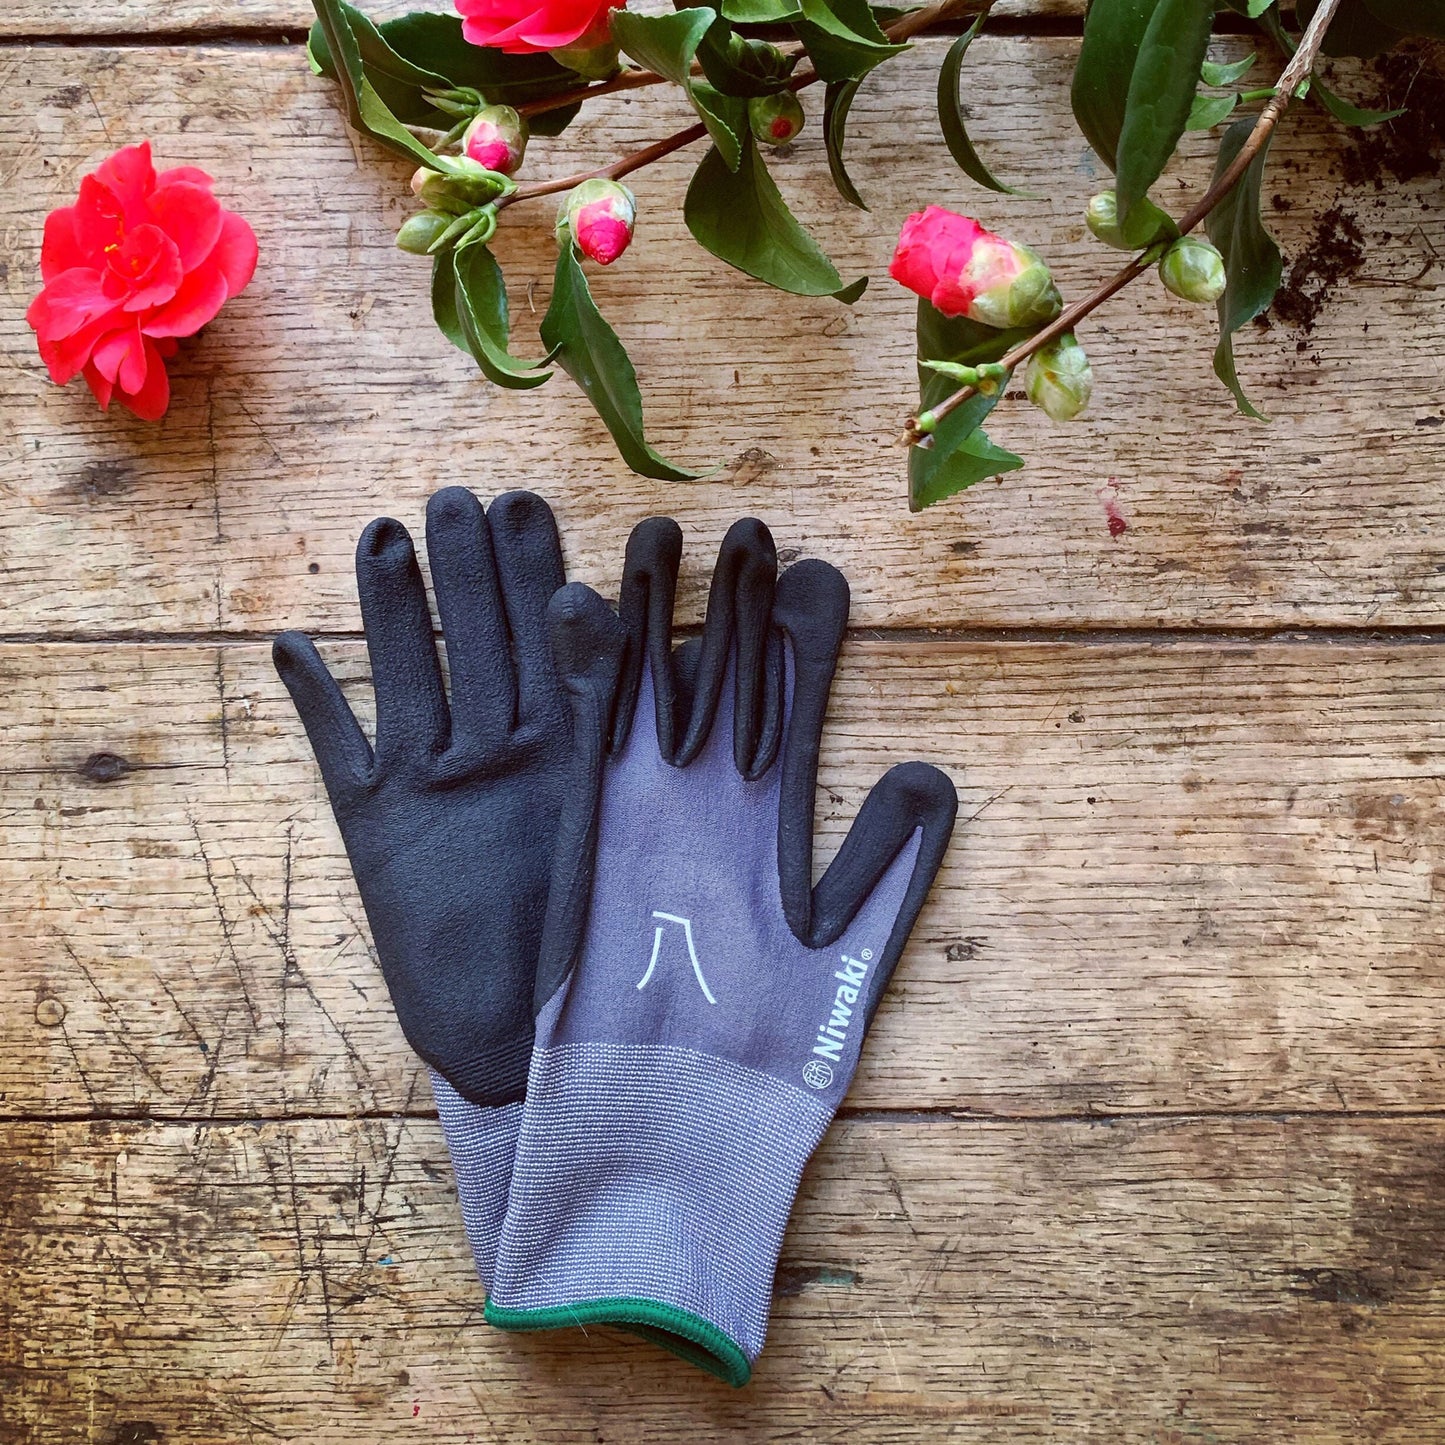 Niwaki Nitrile Grip Gardening Gloves